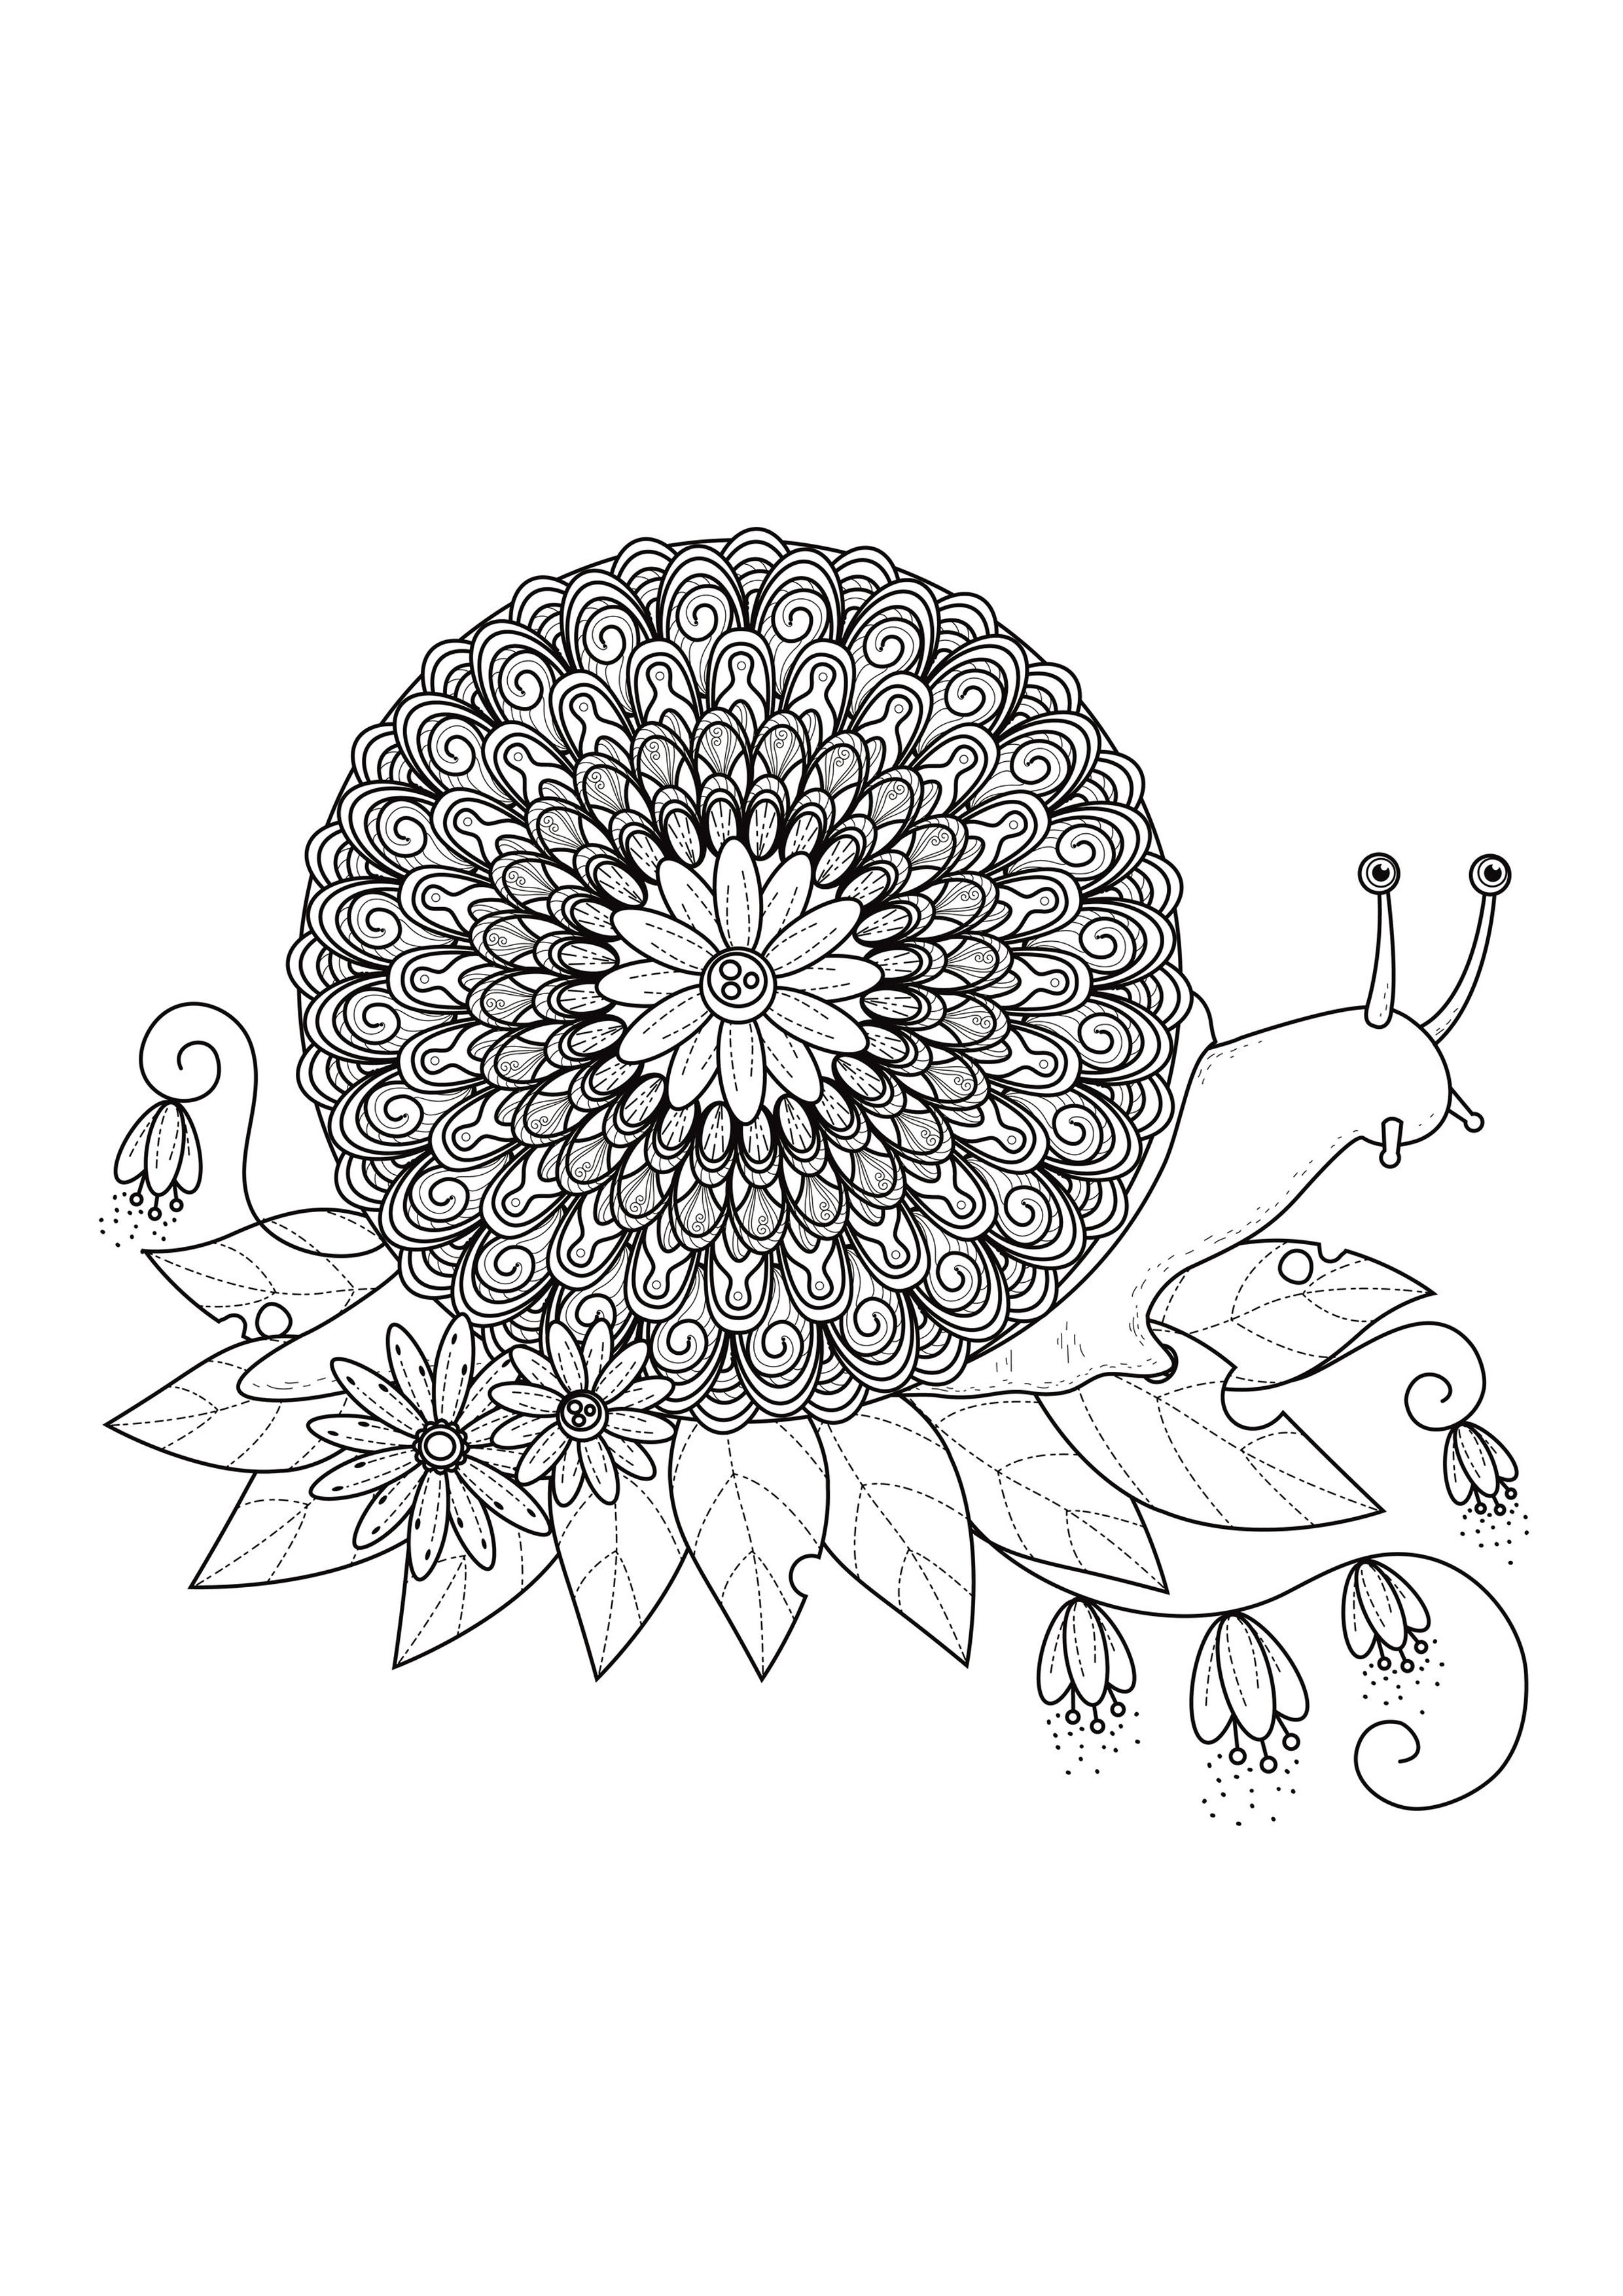 A mix between a snail and a Mandala, Artist : Kchung